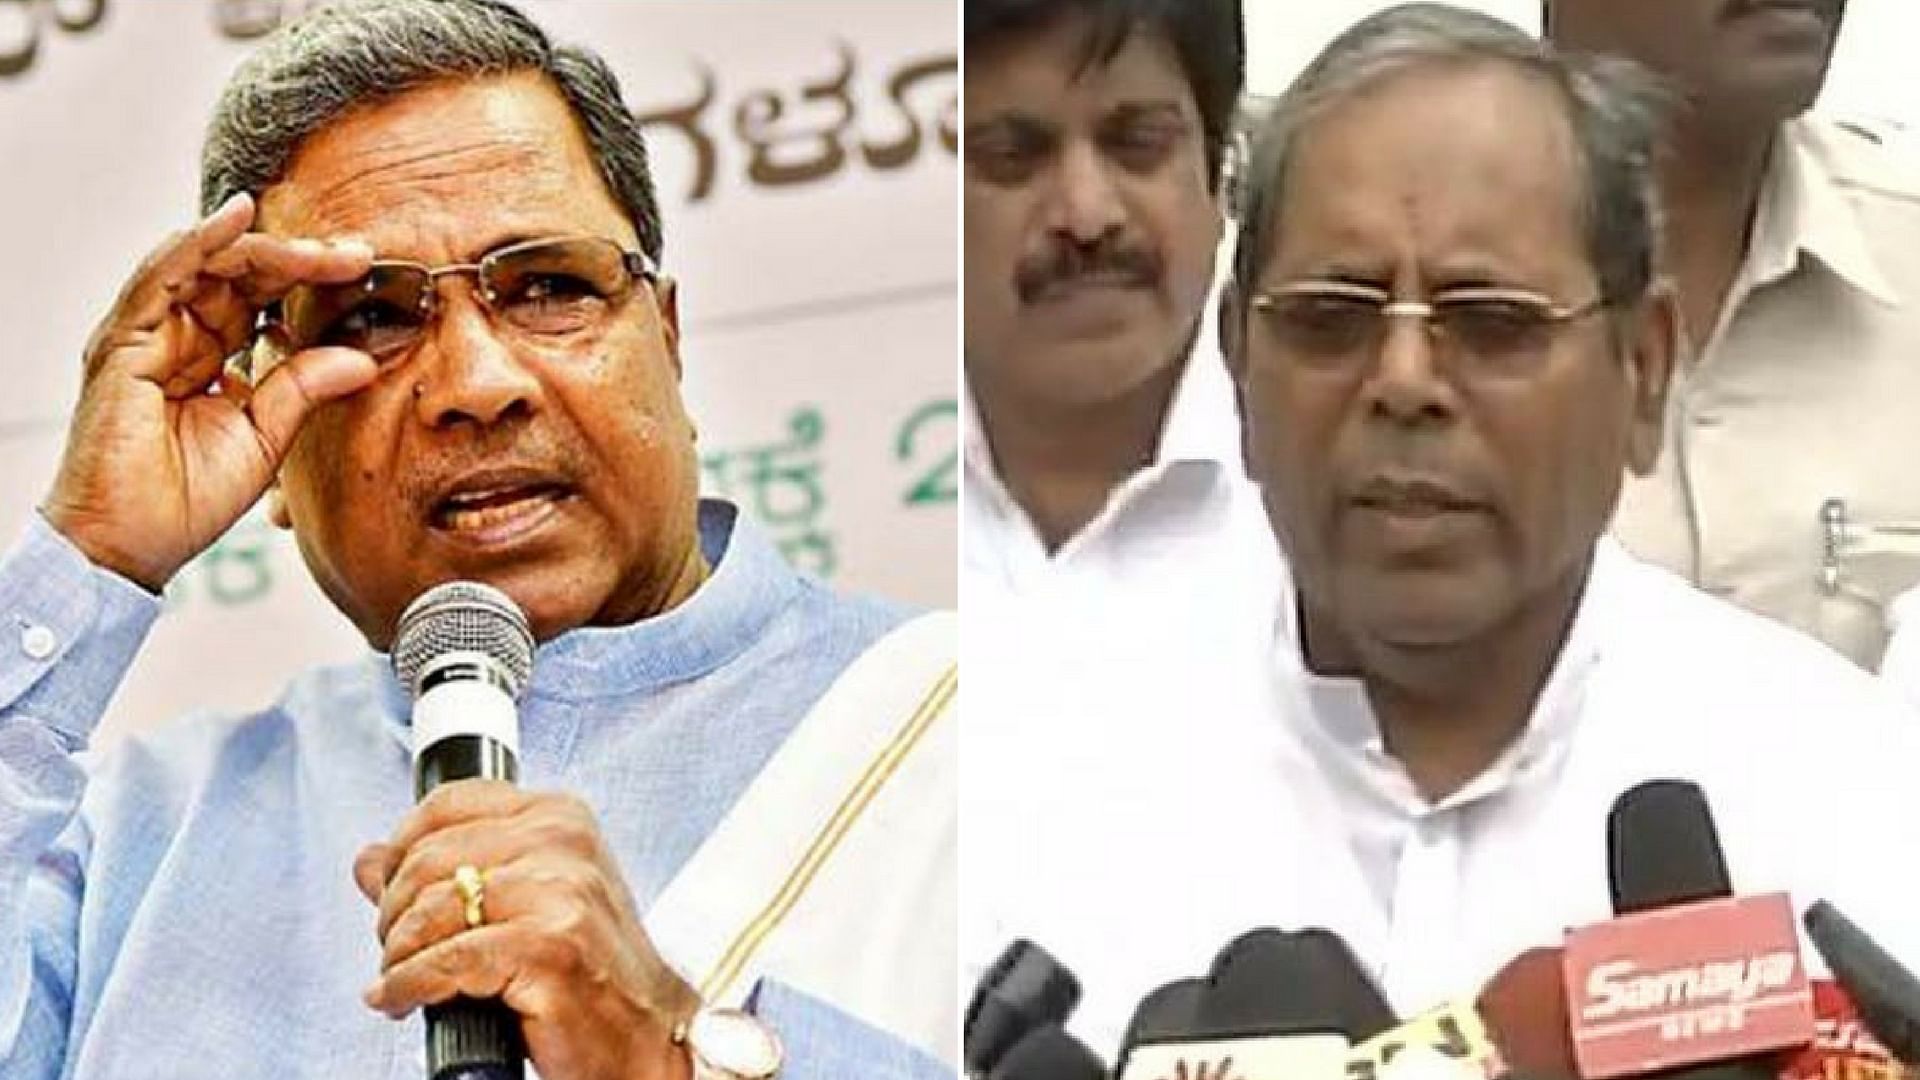 Karnataka Chief Minsiter Siddaramaiah (L) and Karnataka Excise Minister HY Meti. (Photo Courtesy: The News Minute and ANI)